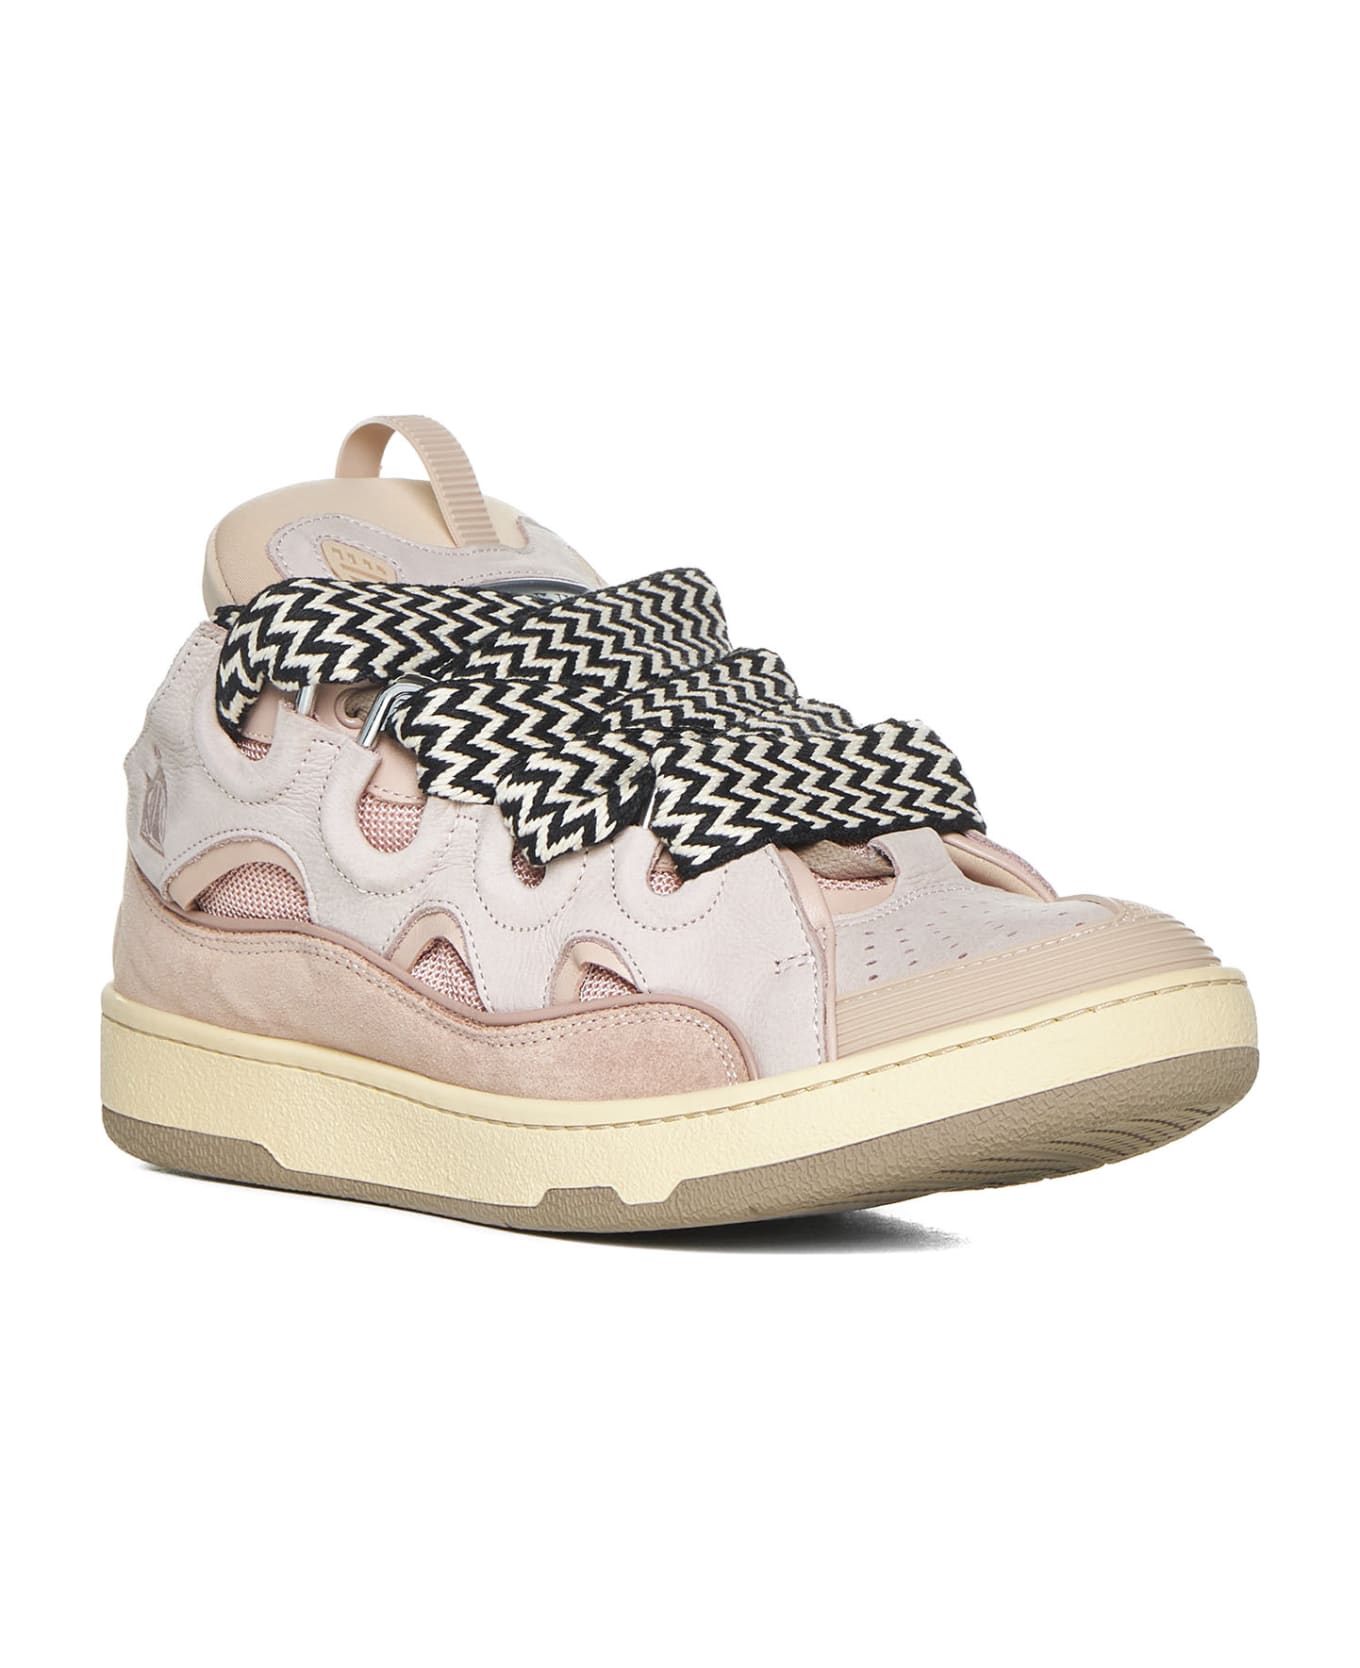 Lanvin Sneakers - Pale pink